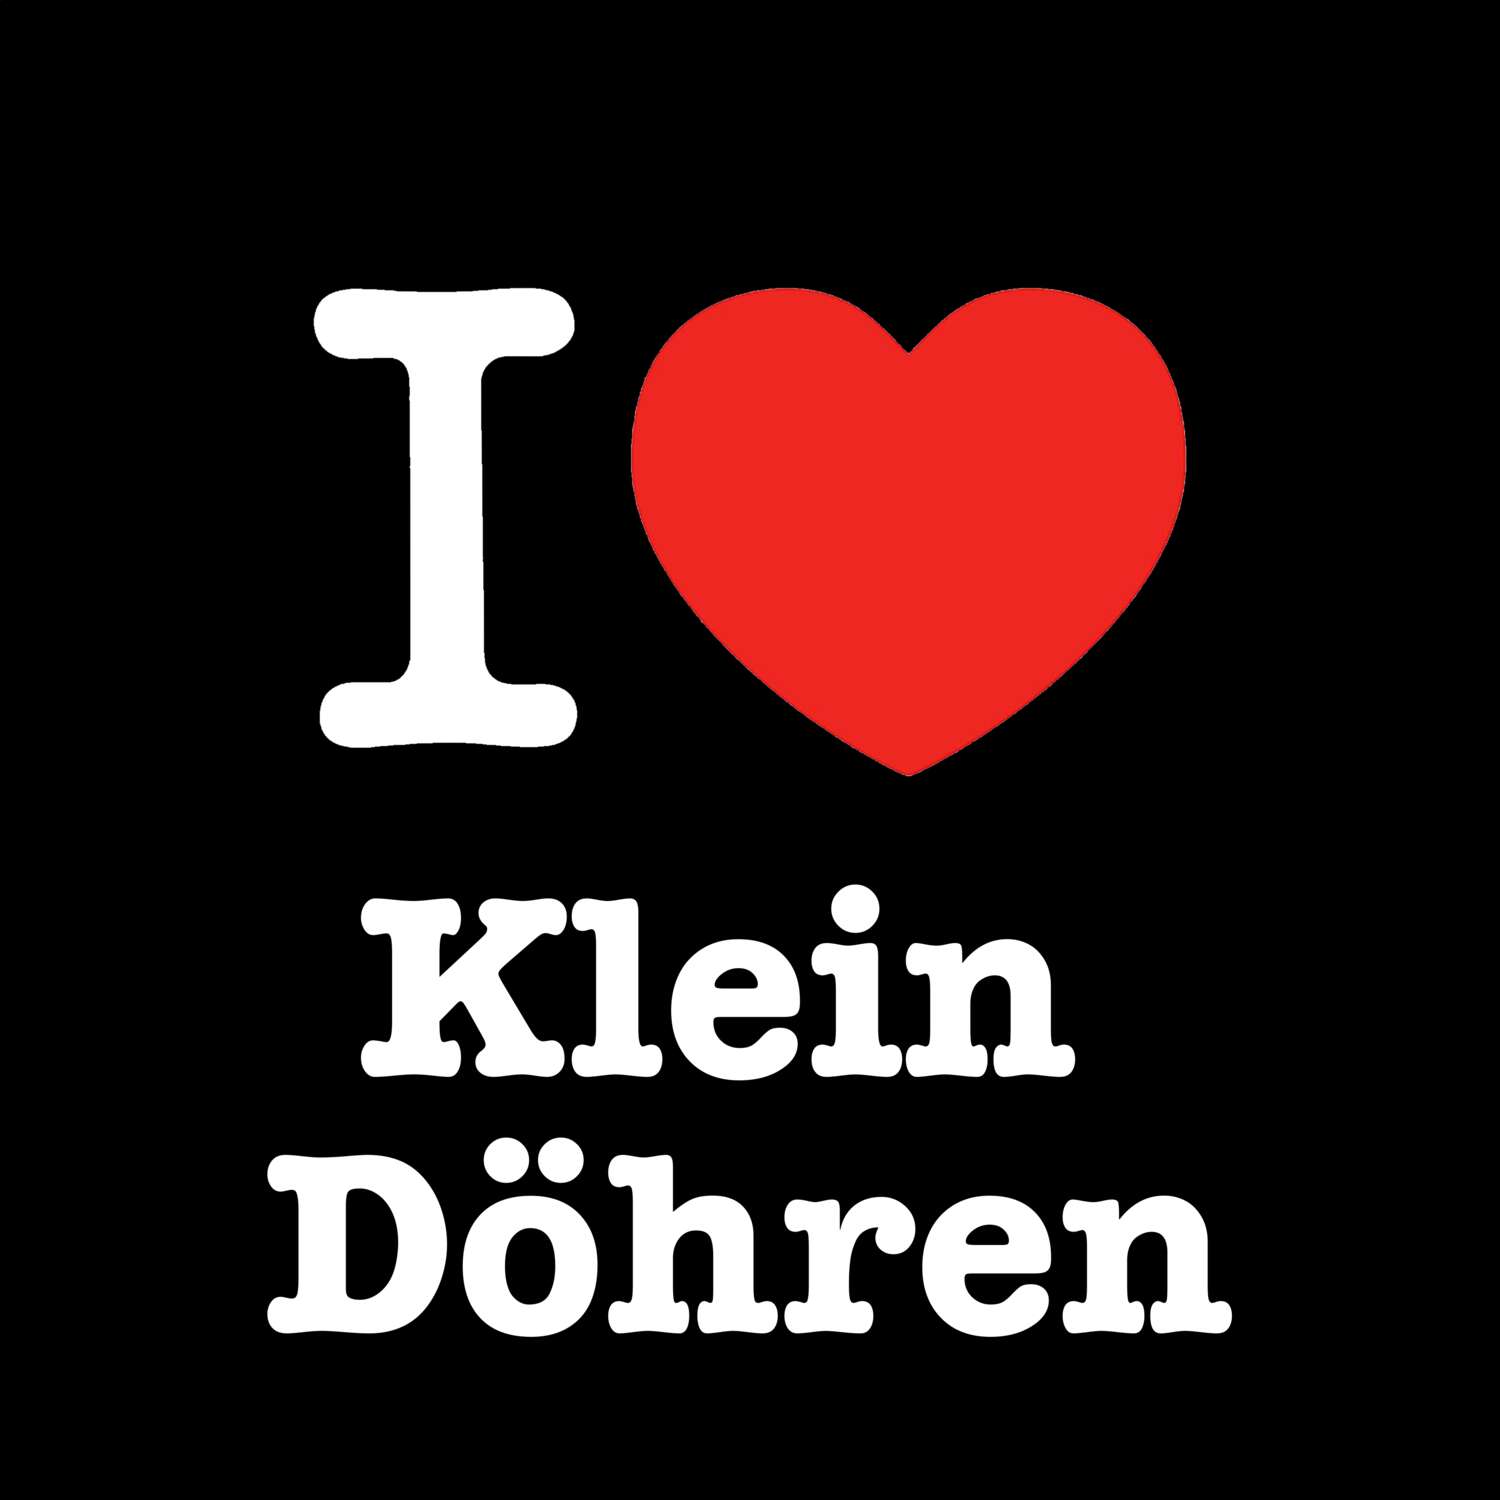 Klein Döhren T-Shirt »I love«